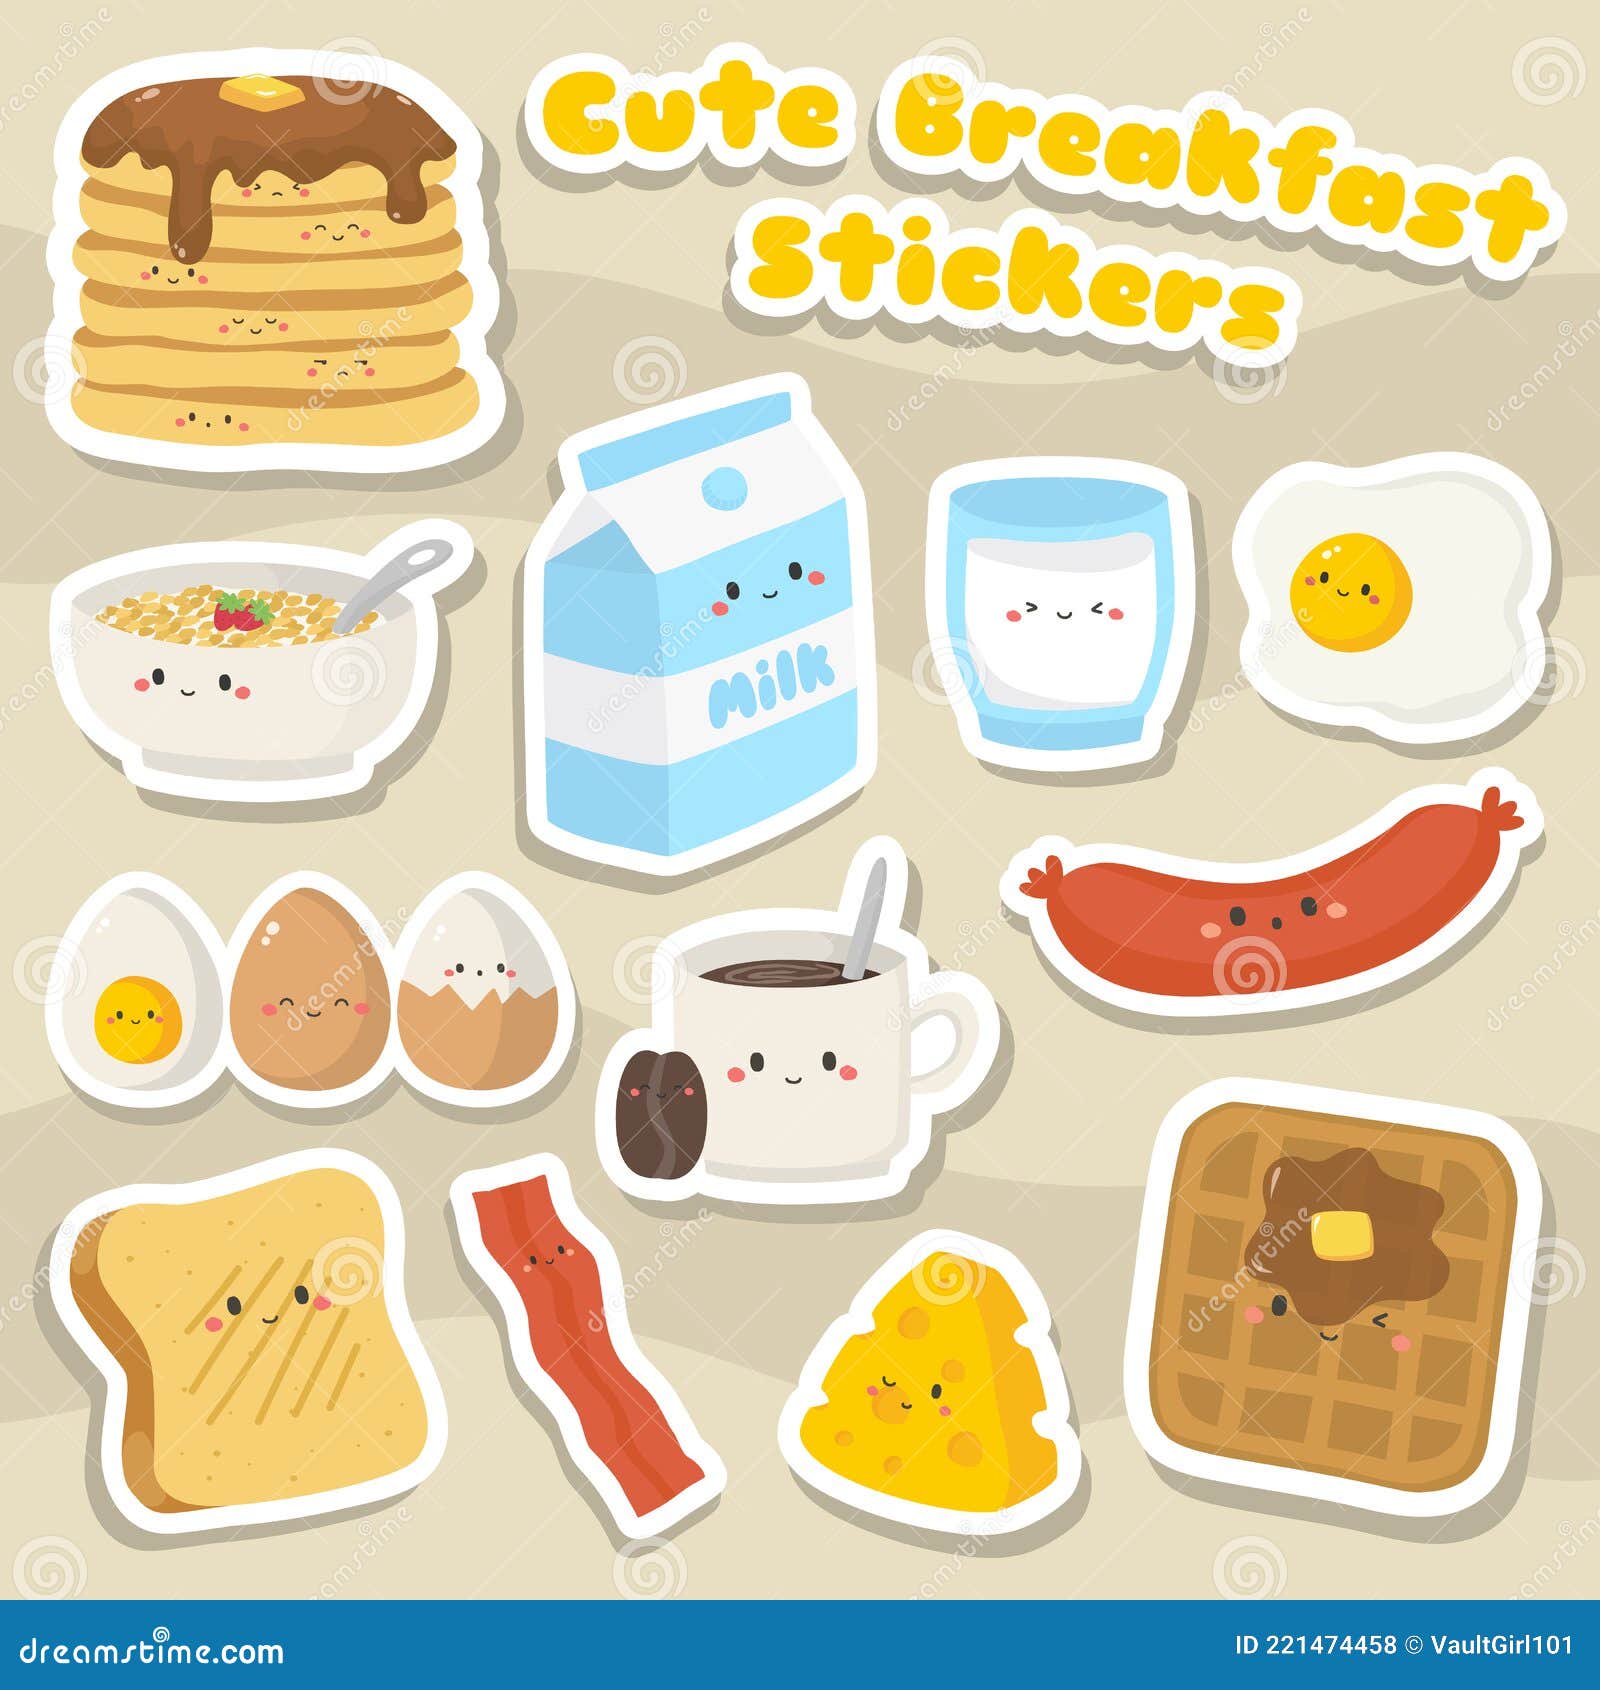 cute breakfast food sticker vector set stock vector illustration of adorable bacon 221474458